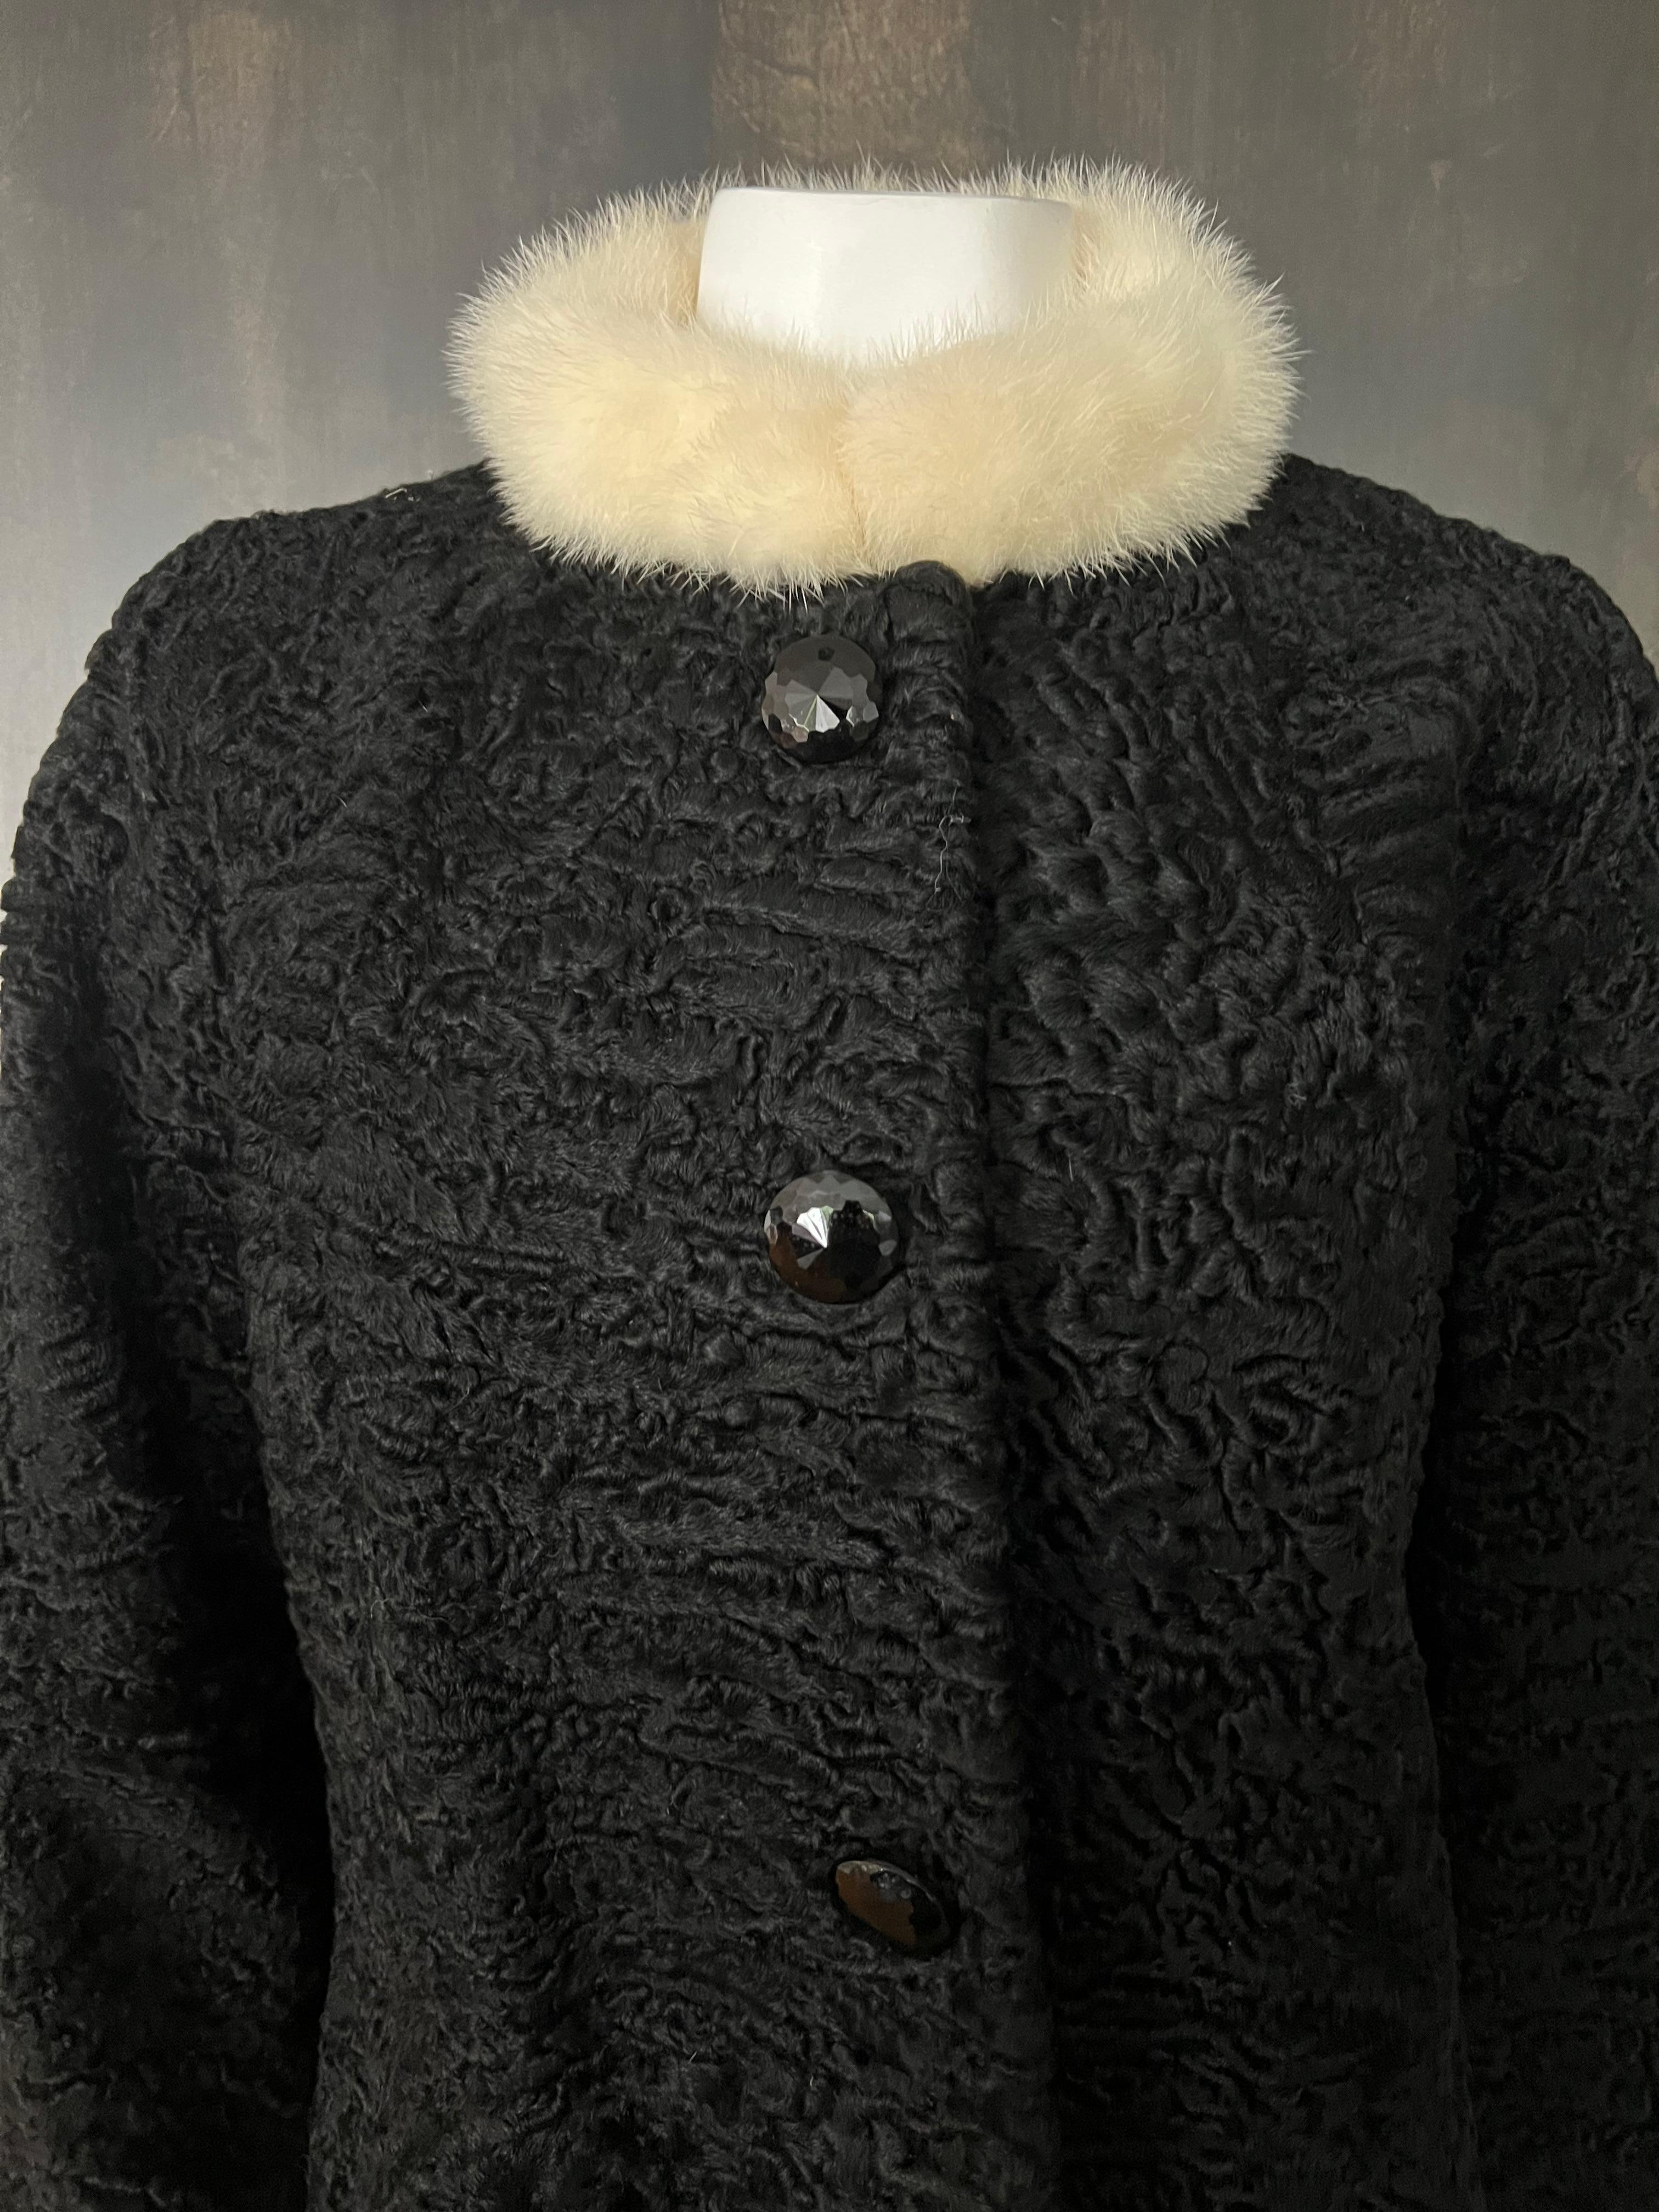 - Black karakul sheep 
- White fur collar
- Three front button closure
- Mid length
